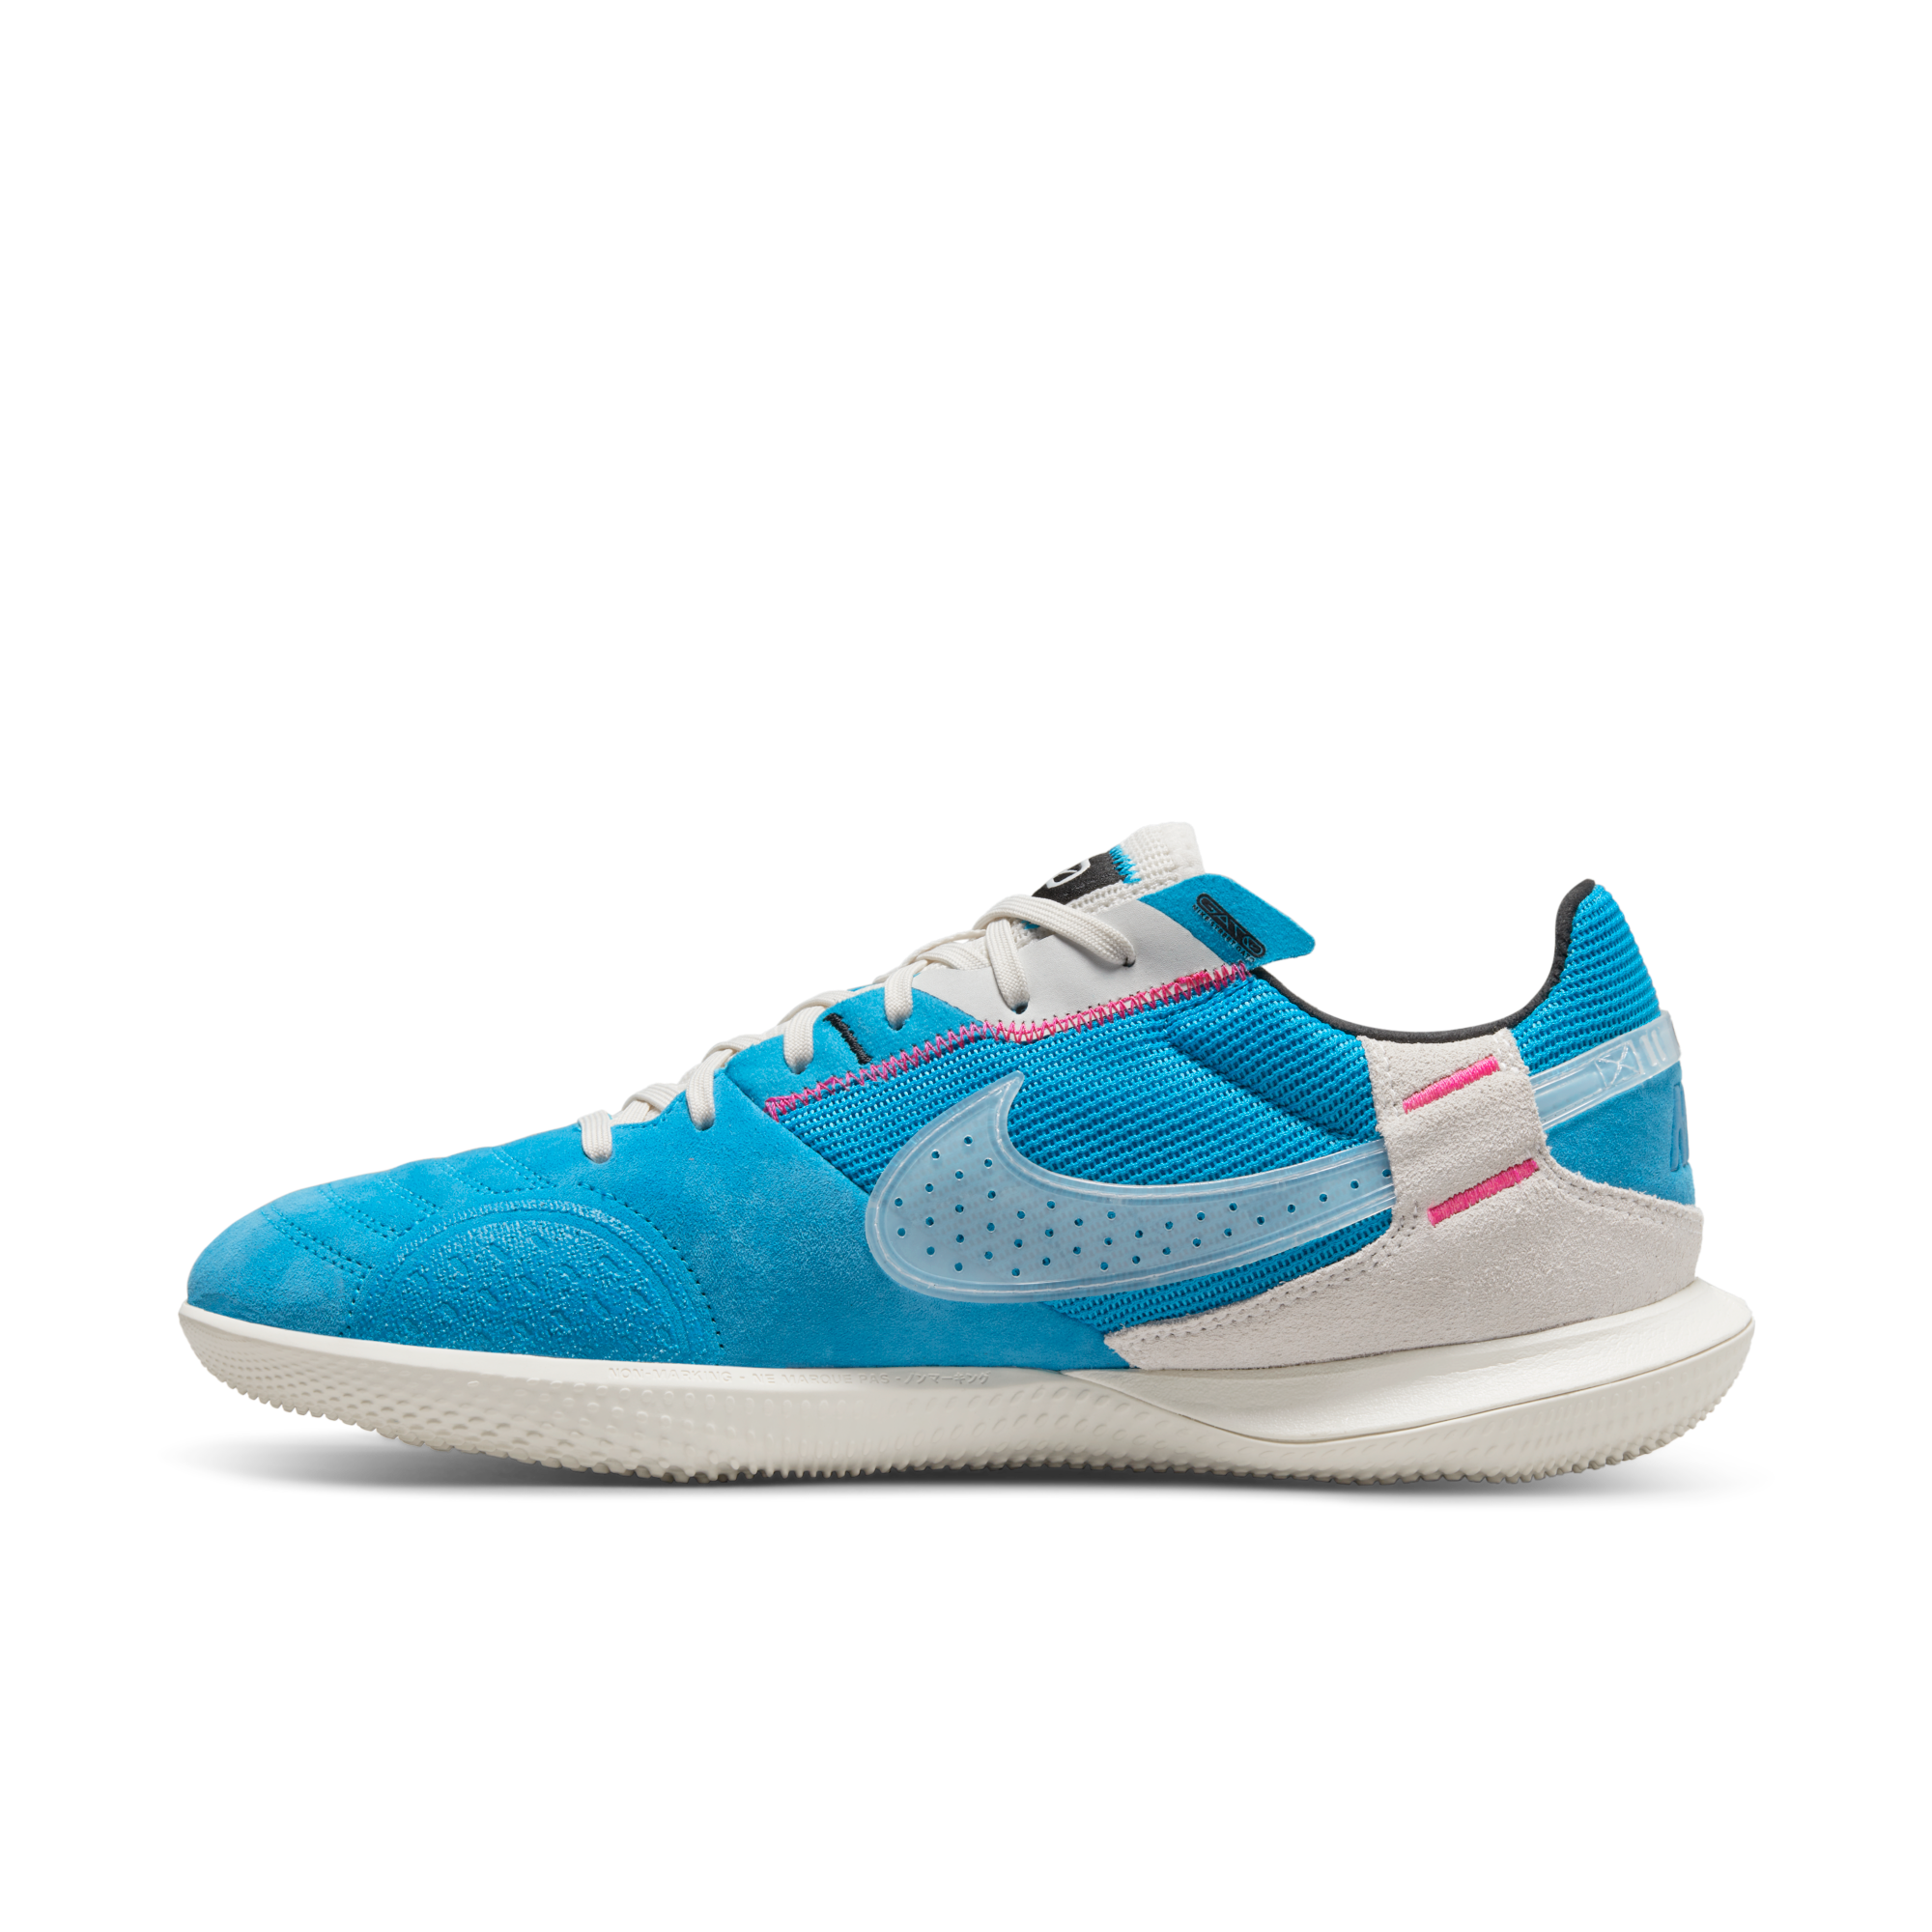 stefanssoccer.com:Nike Street Gato Indoor Soccer Shoes - Laser Blue Phantom / Pink Prime / White